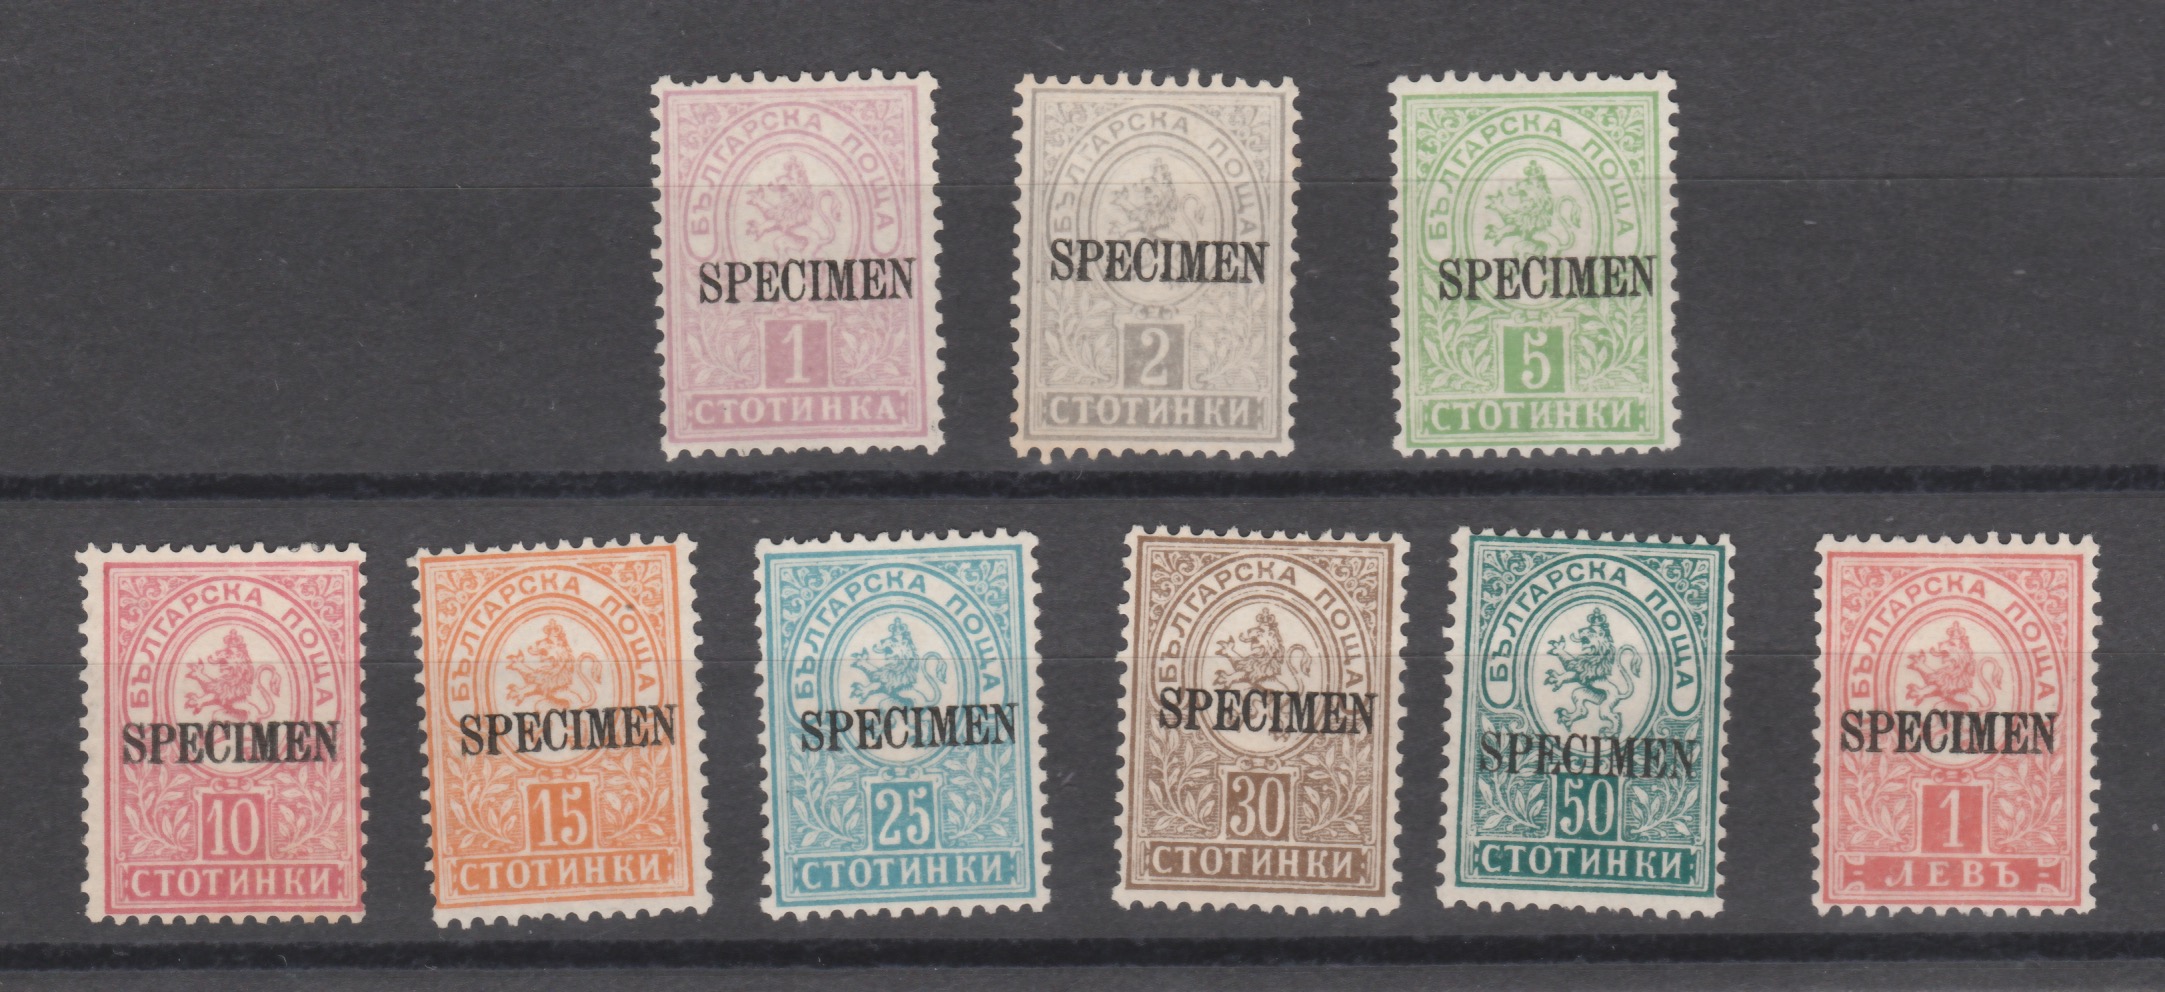 Bulgaria 1889-91 Unused Overprinted Specimen